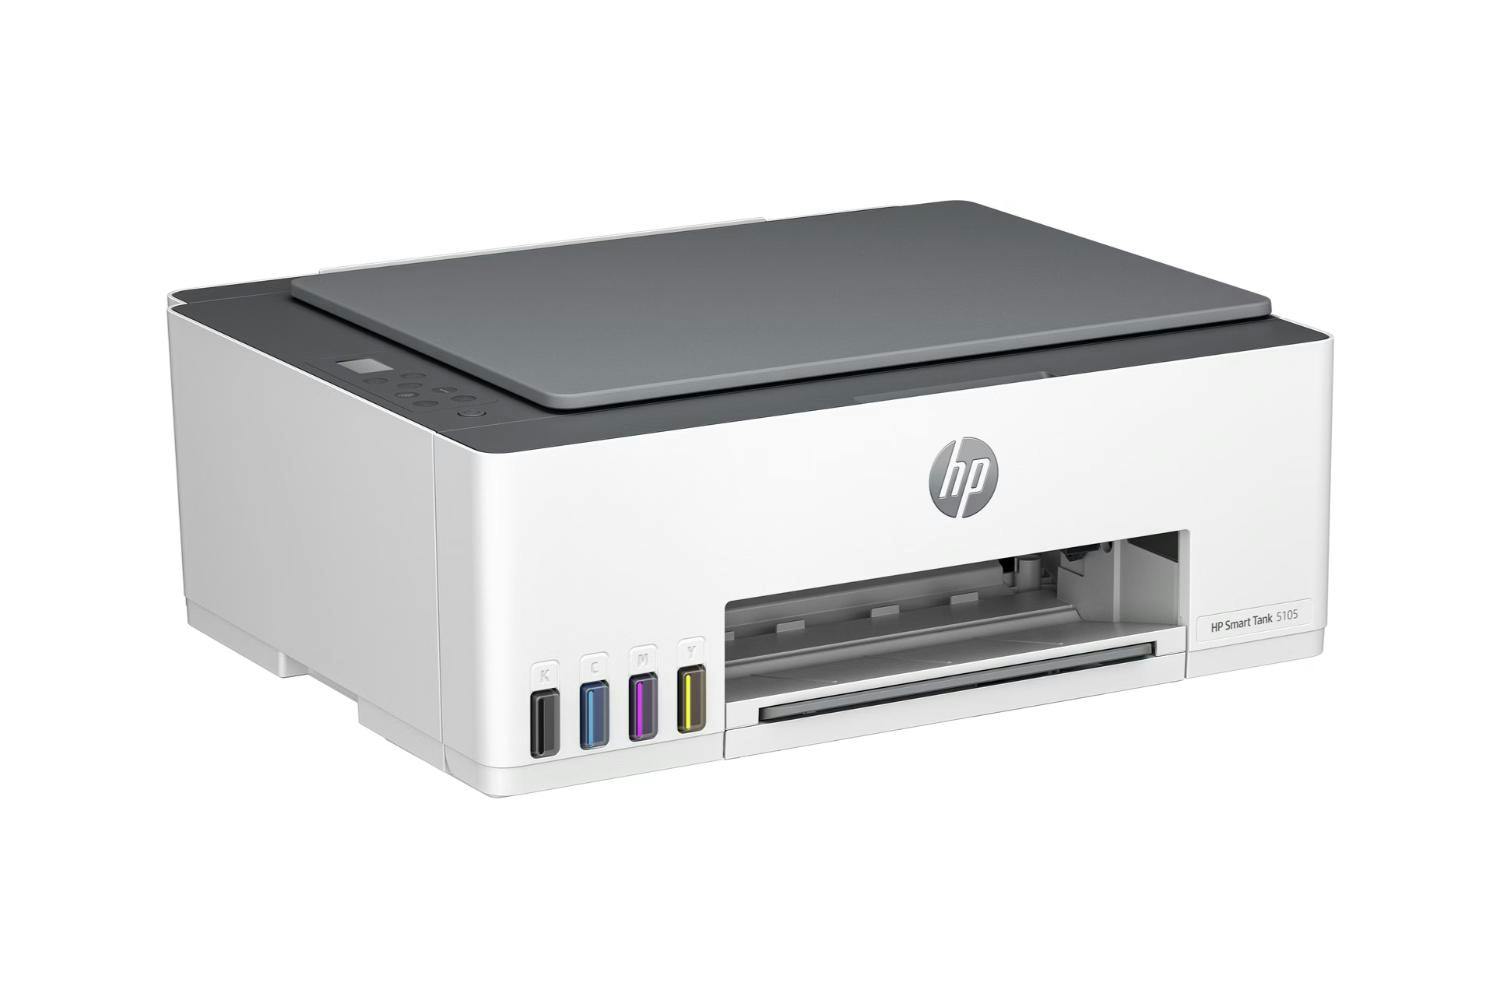 HP Smart Tank Plus 5105 Wireless All-in-One Colour Printer